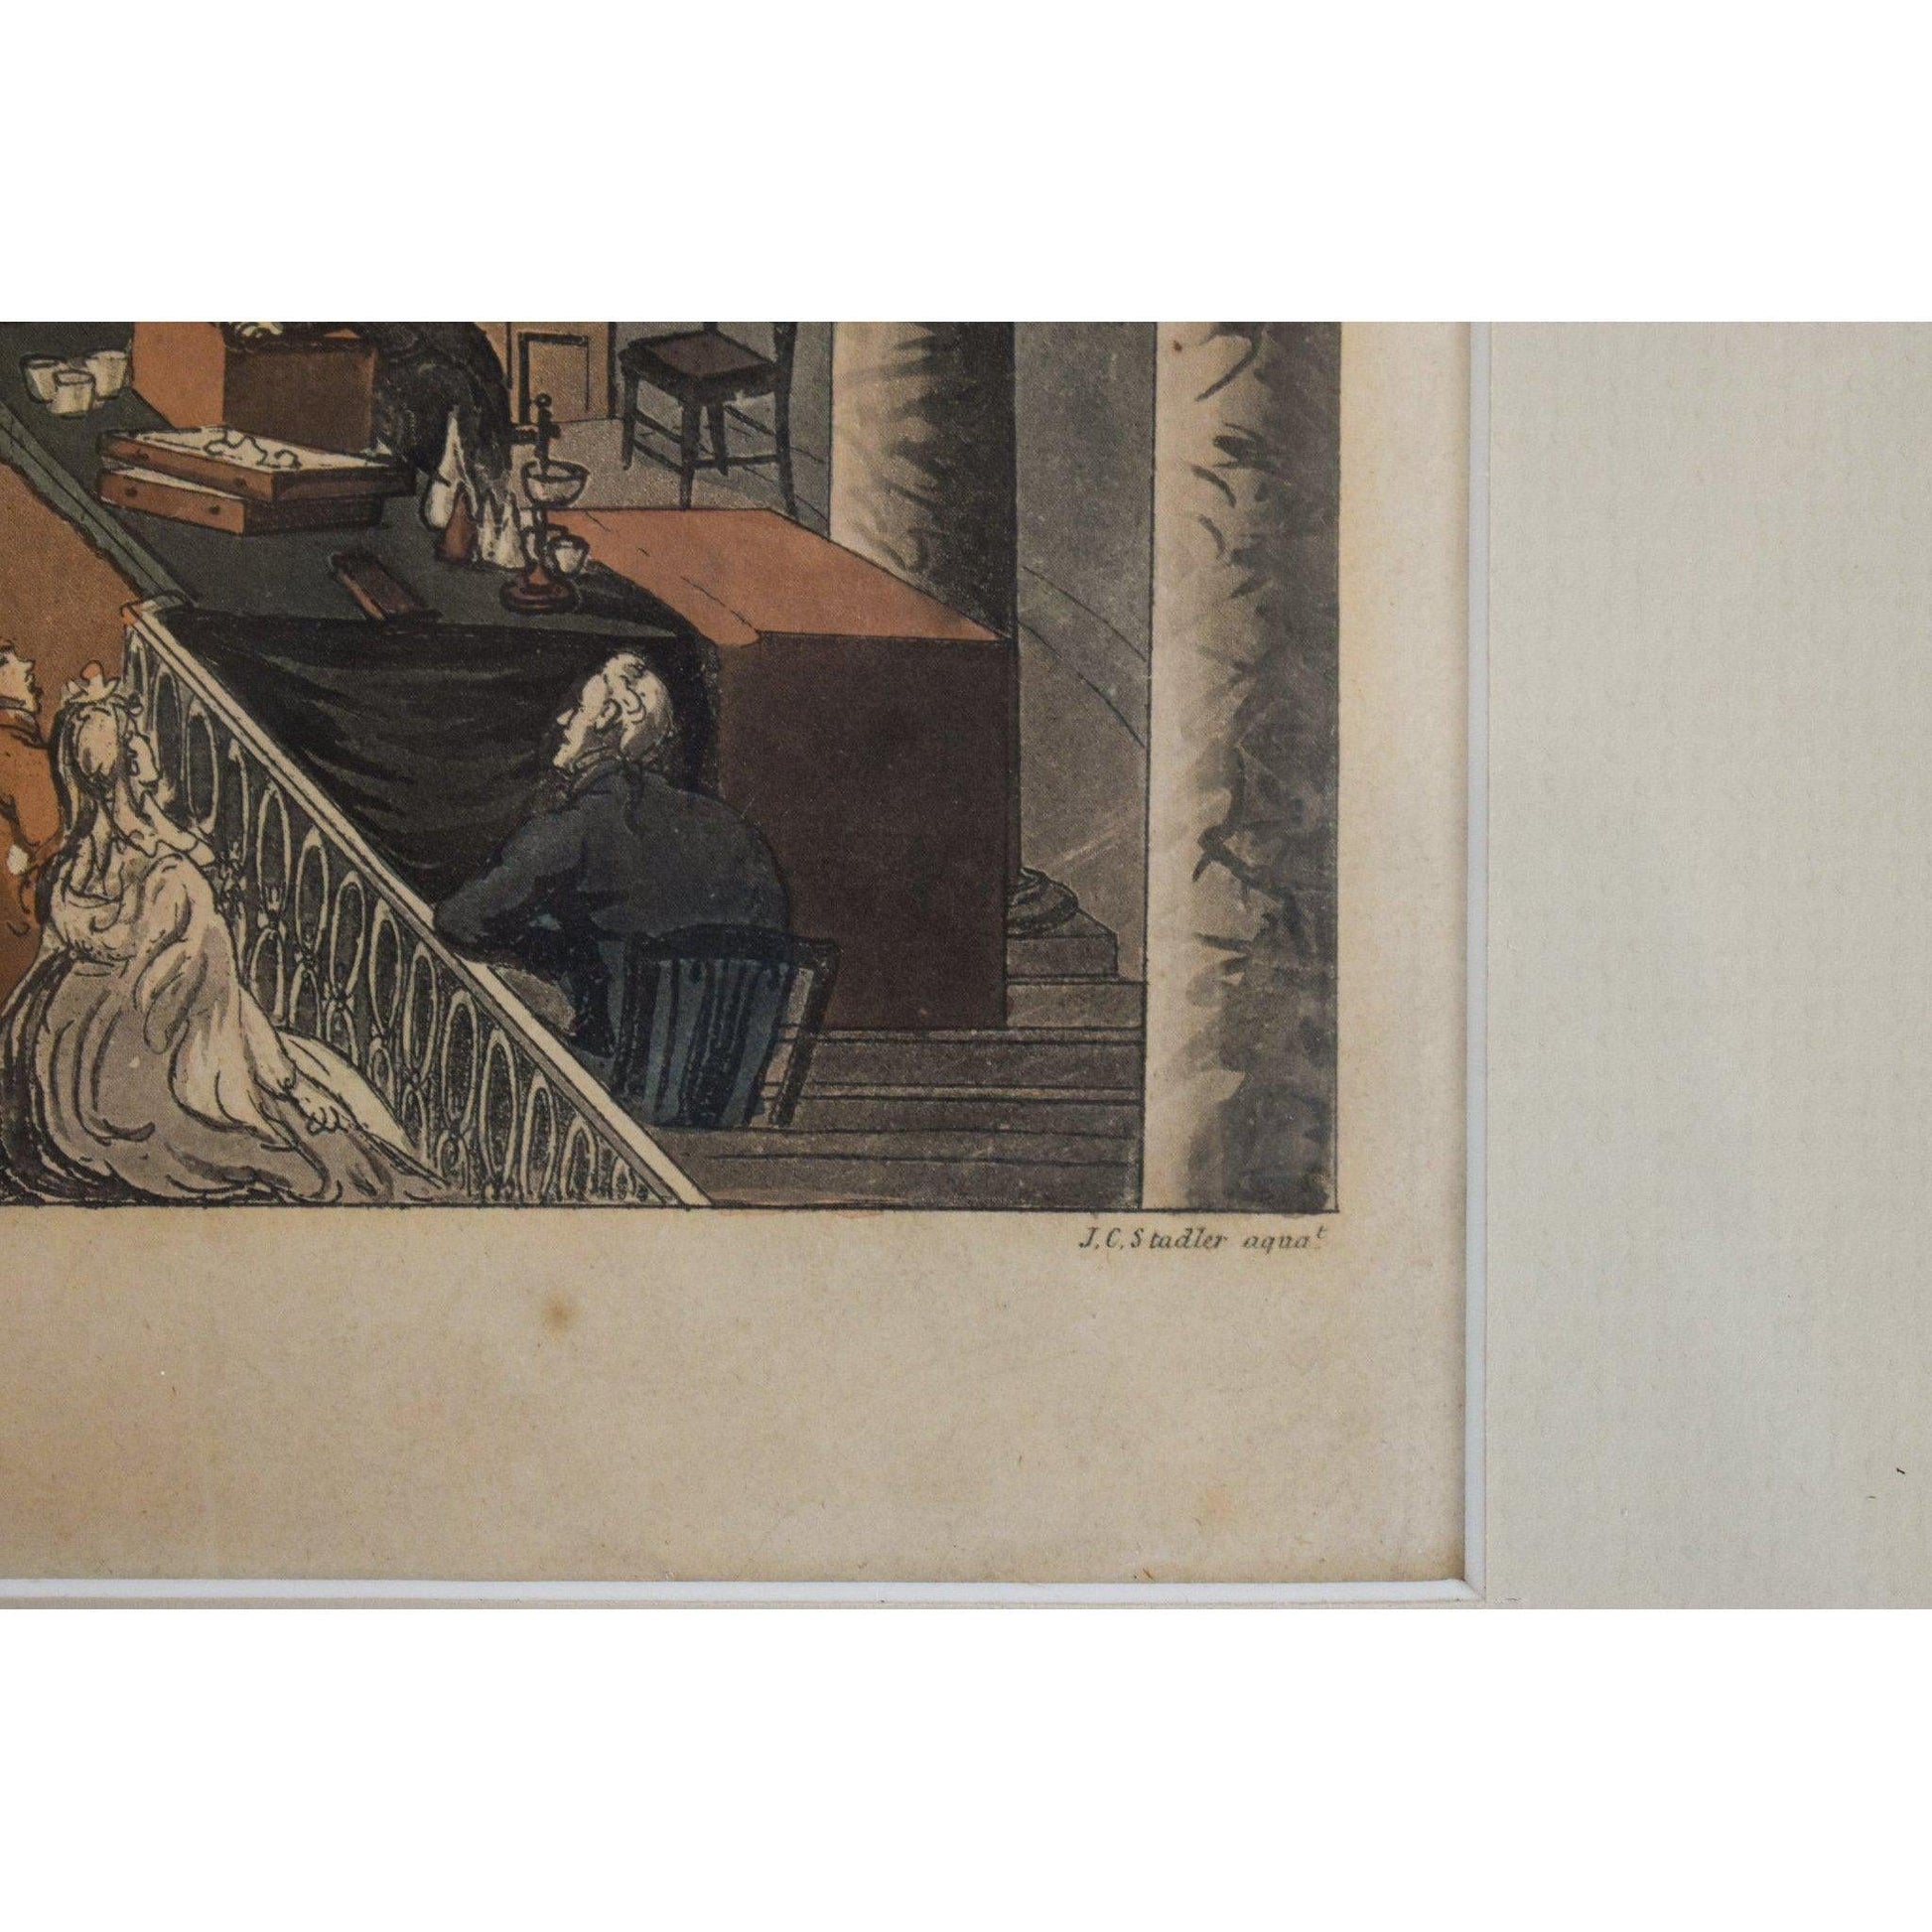 Thomas Rowlandson etching hand-coloured aquatint entitled Surrey Institution original 1809 for sale at Winckelmann Gallery